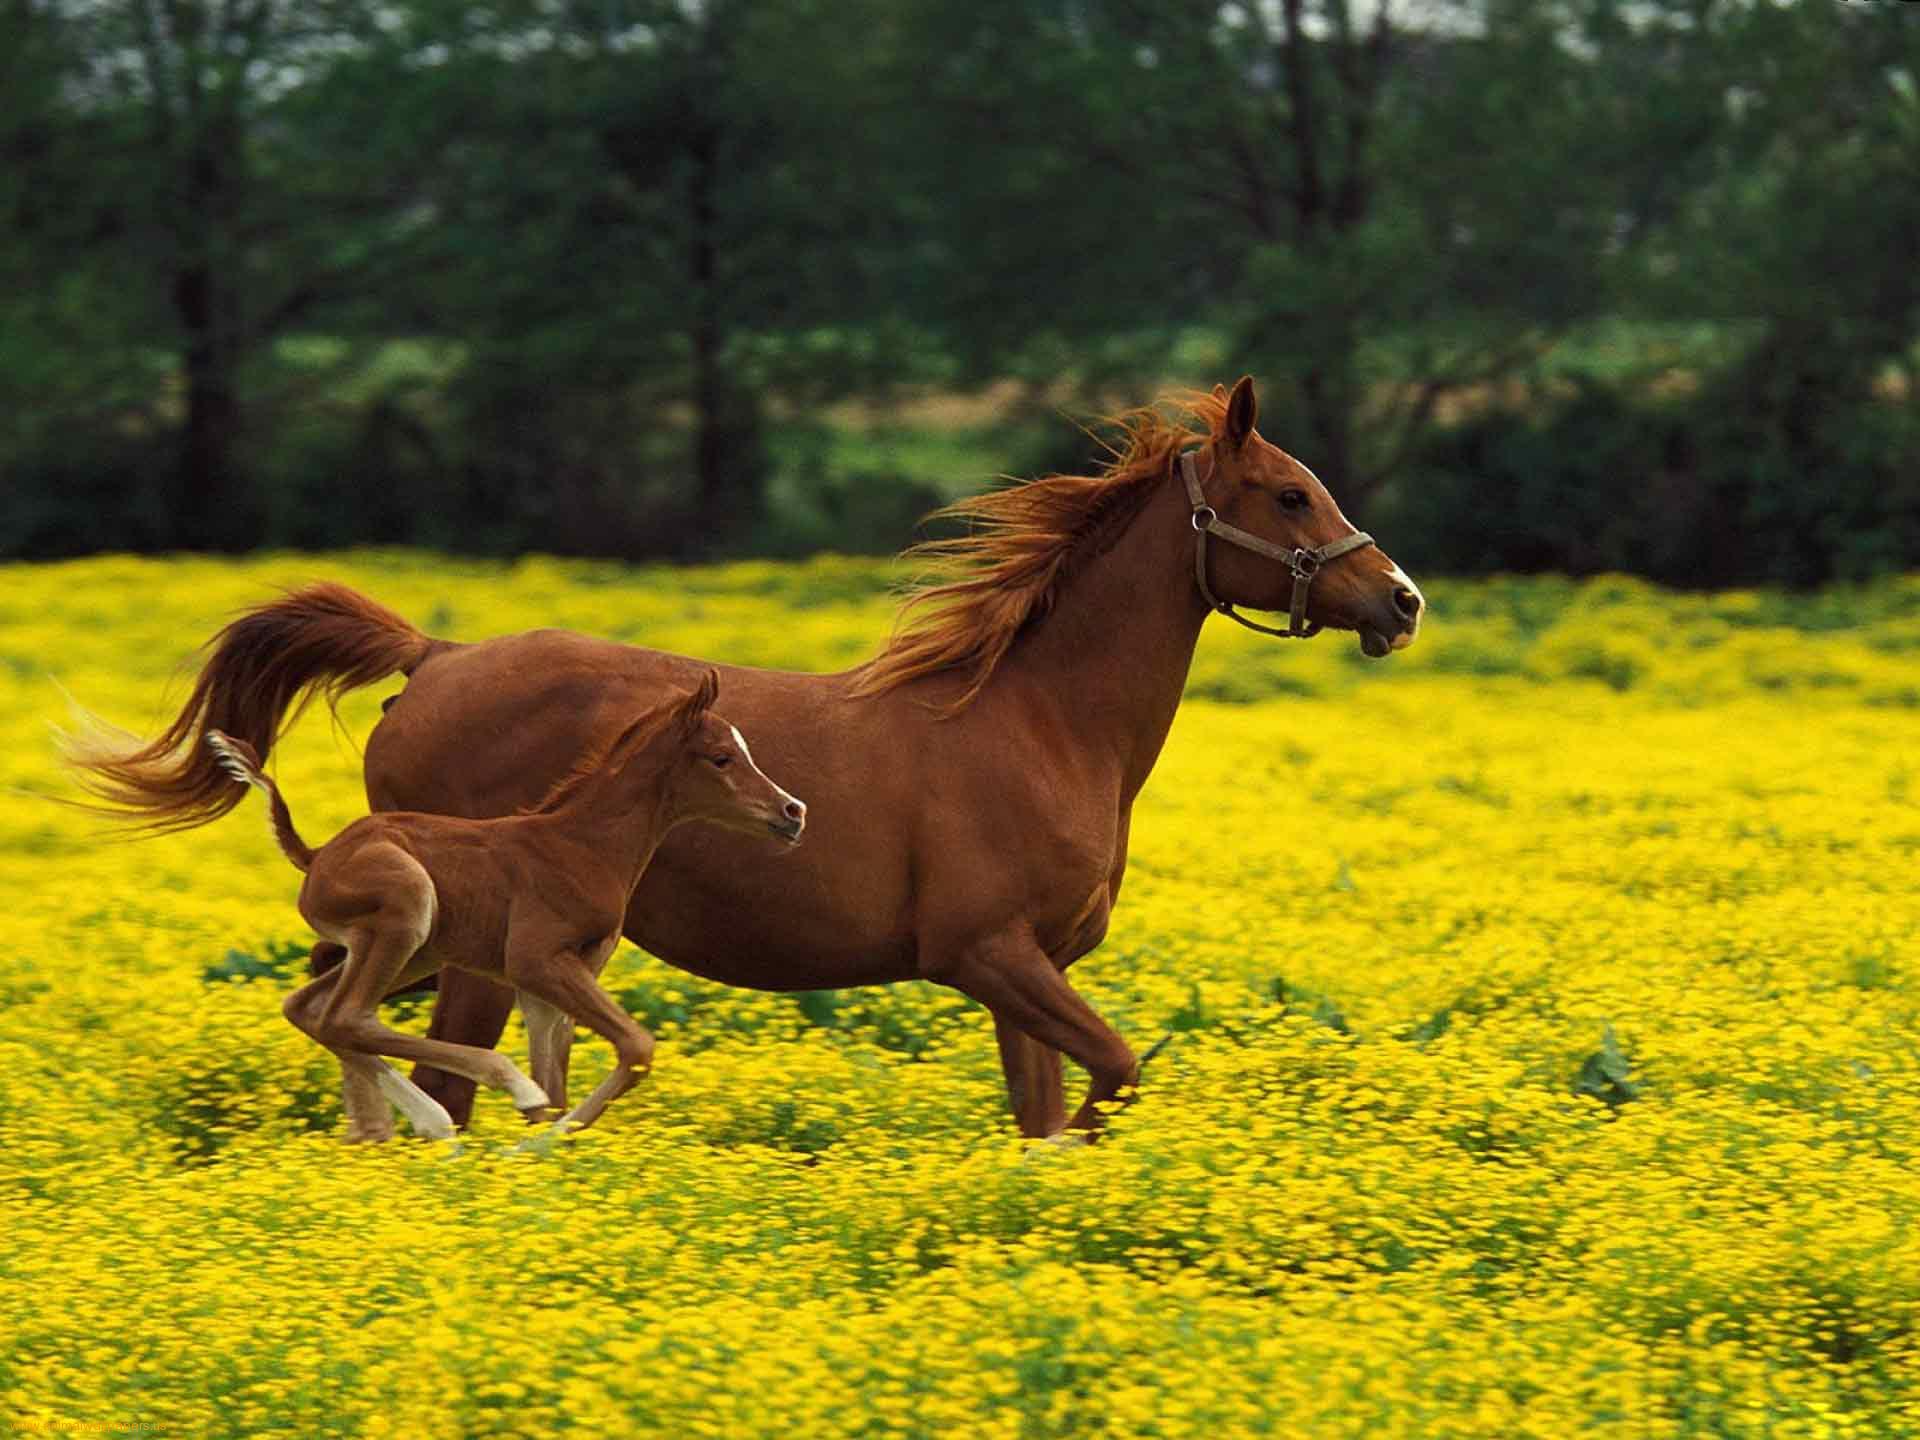 spring photos for desktop | Download Horses wallpaper, 'Gelderlander ...